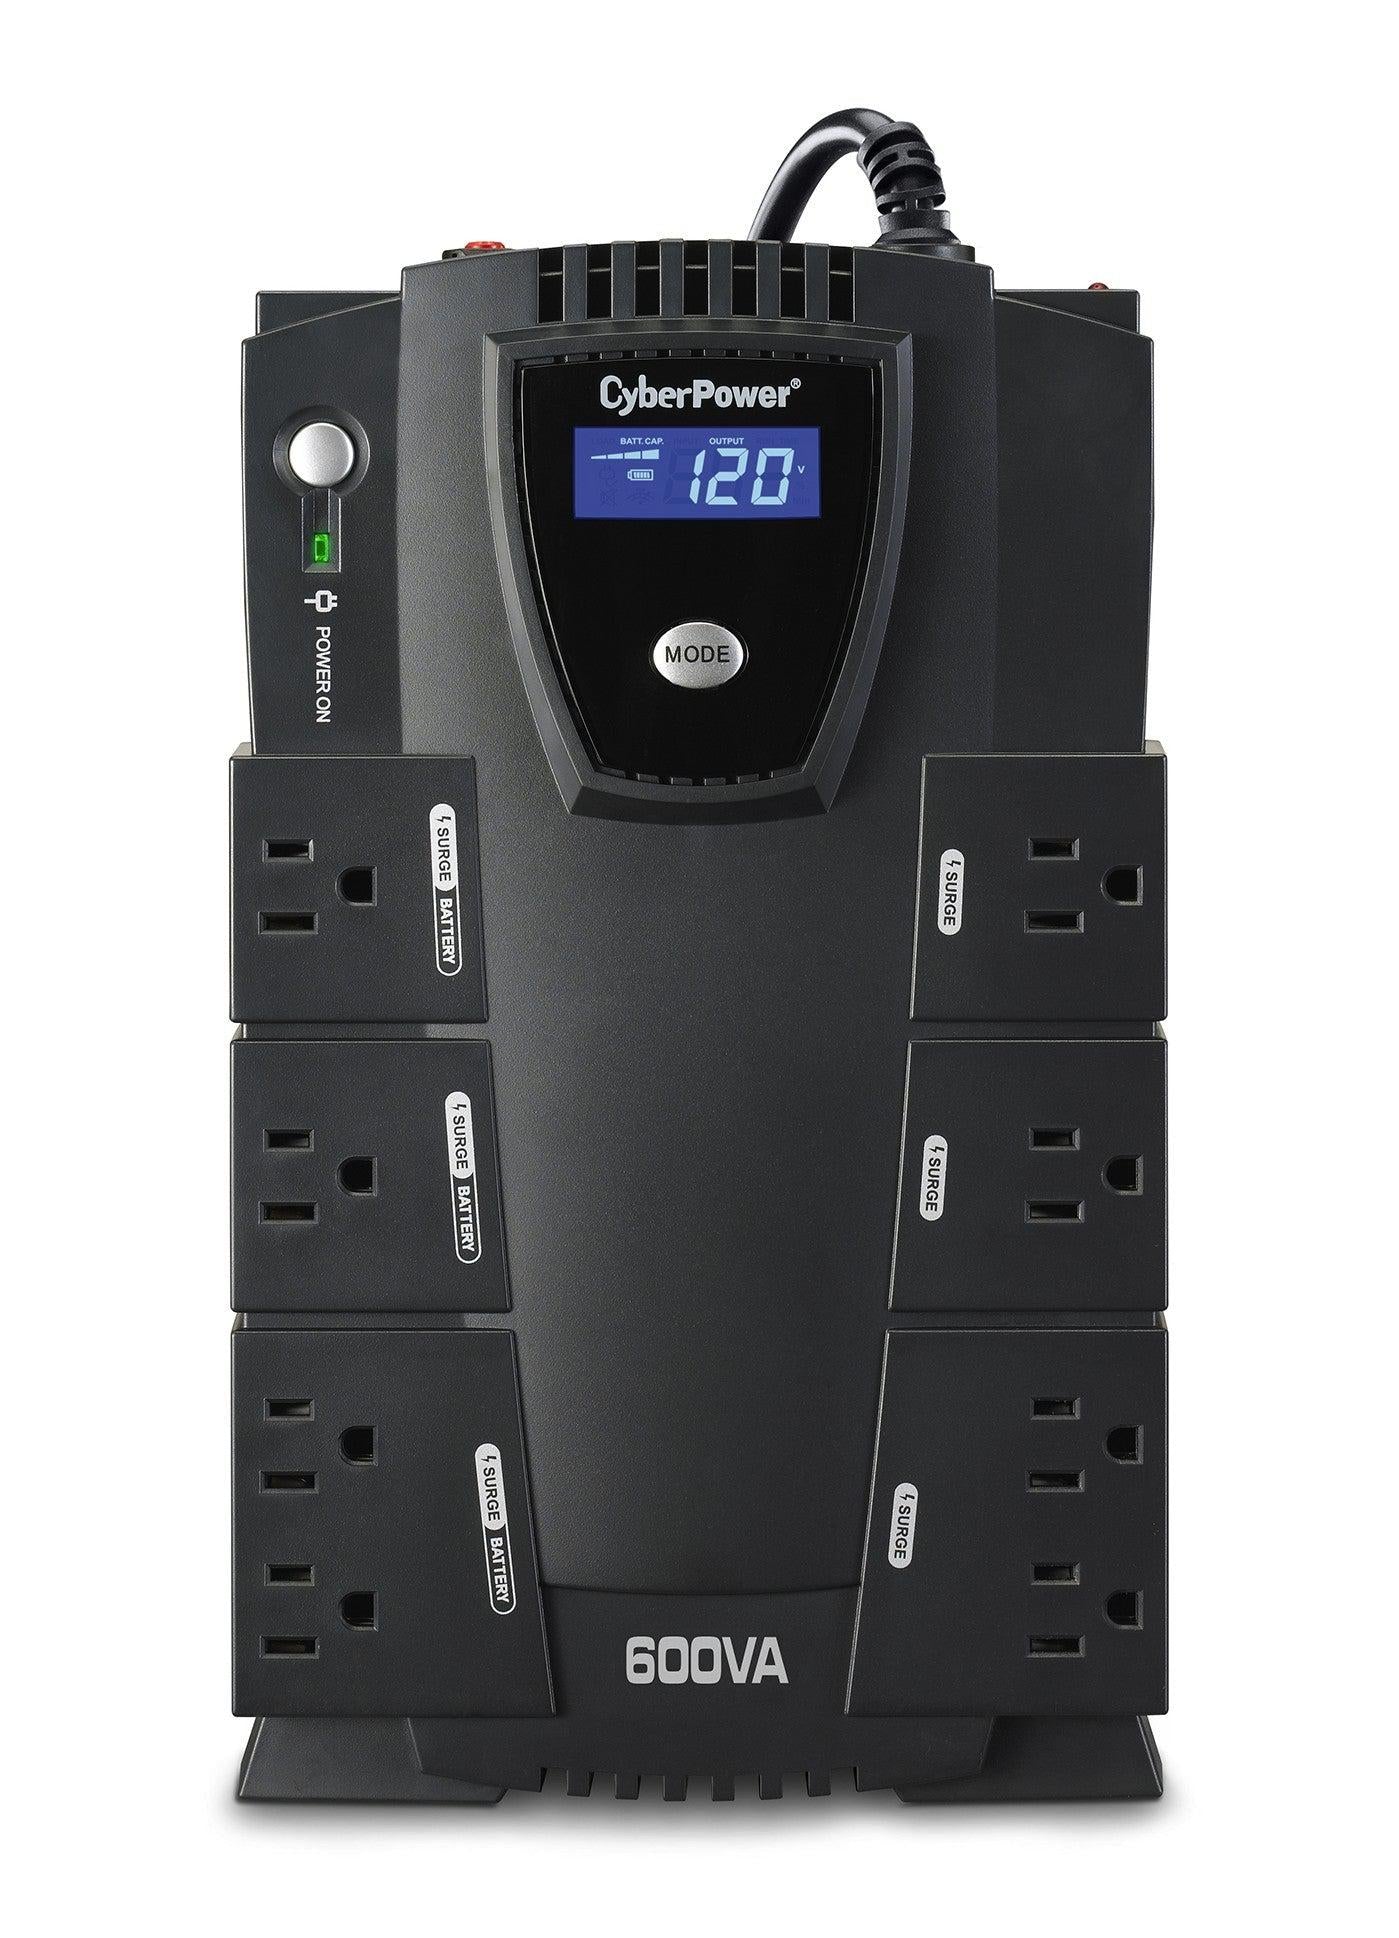 Cyberpower Cp600Lcd Uninterruptible Power Supply (Ups) Standby (Offline) 0.6 Kva 340 W